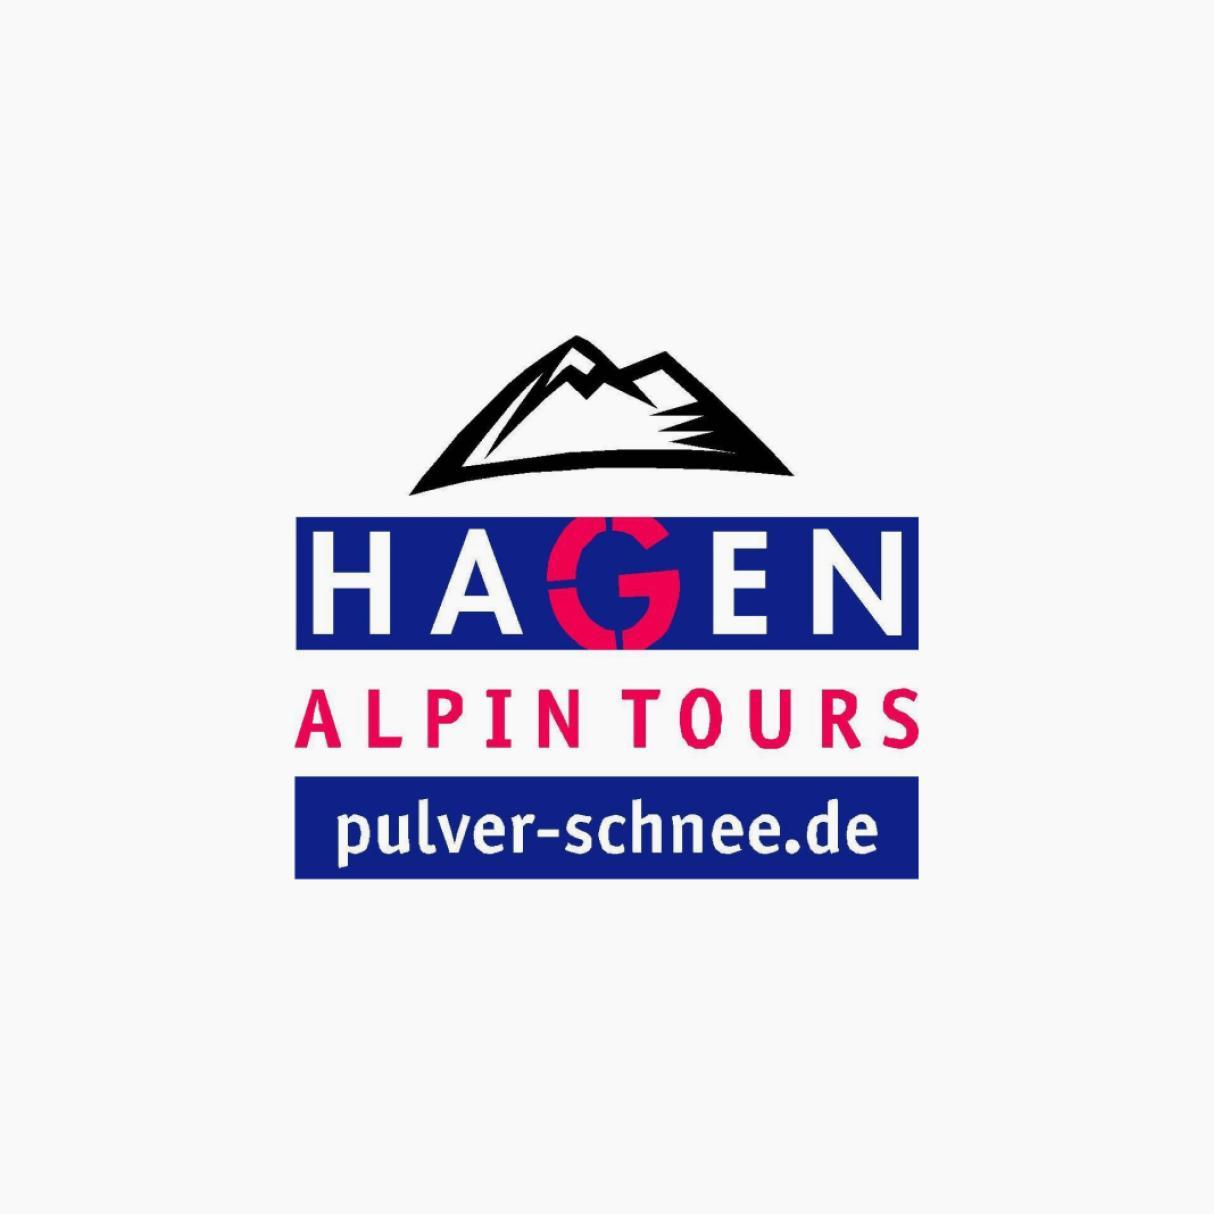 Hagen Alpin Tours logo